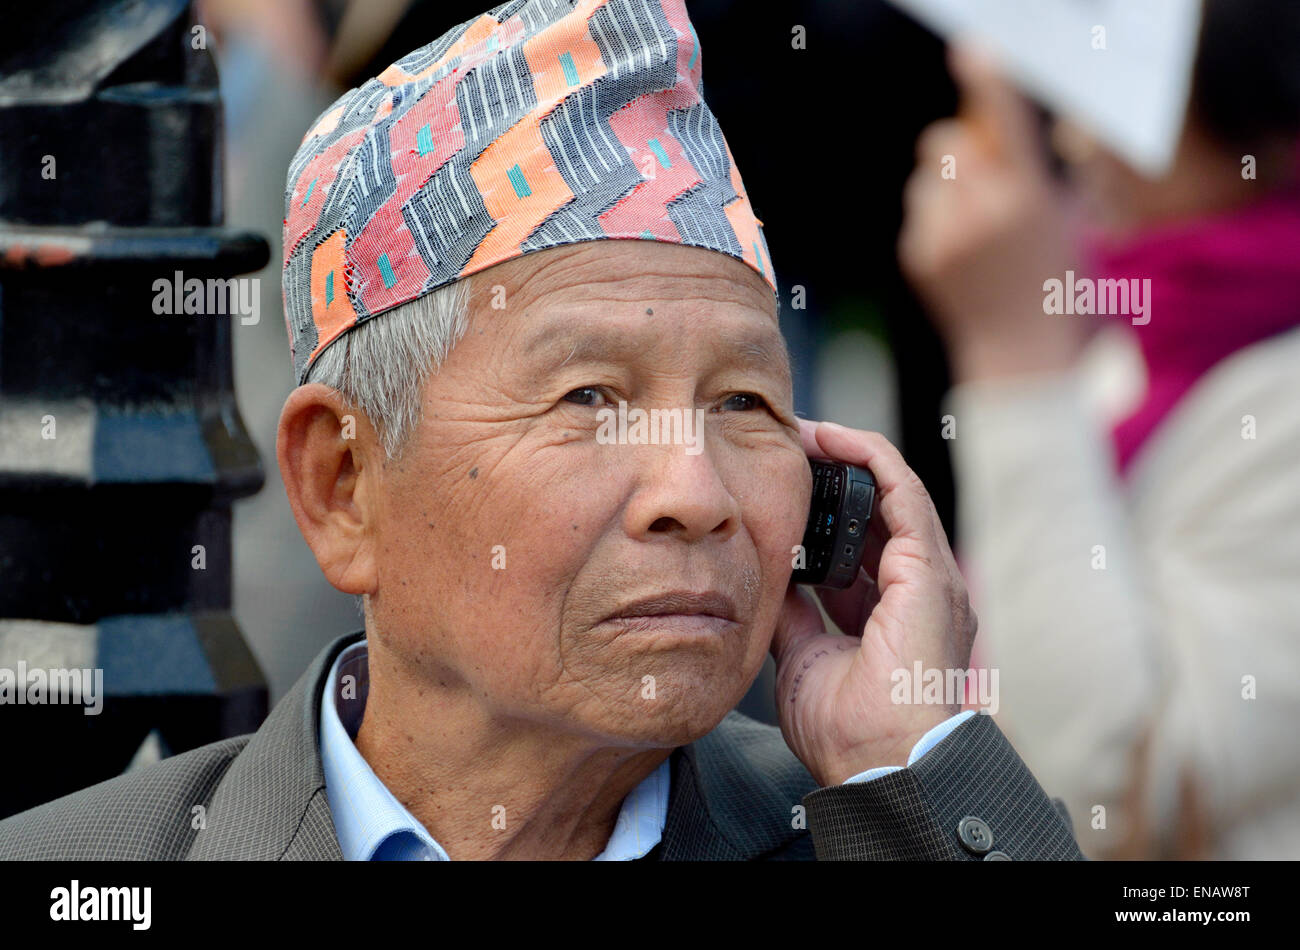 Elderly Nepalese man / retired Gurkha using his mobile phone, London 2015, wearing a Dhaka topi - traditional hat Stock Photo